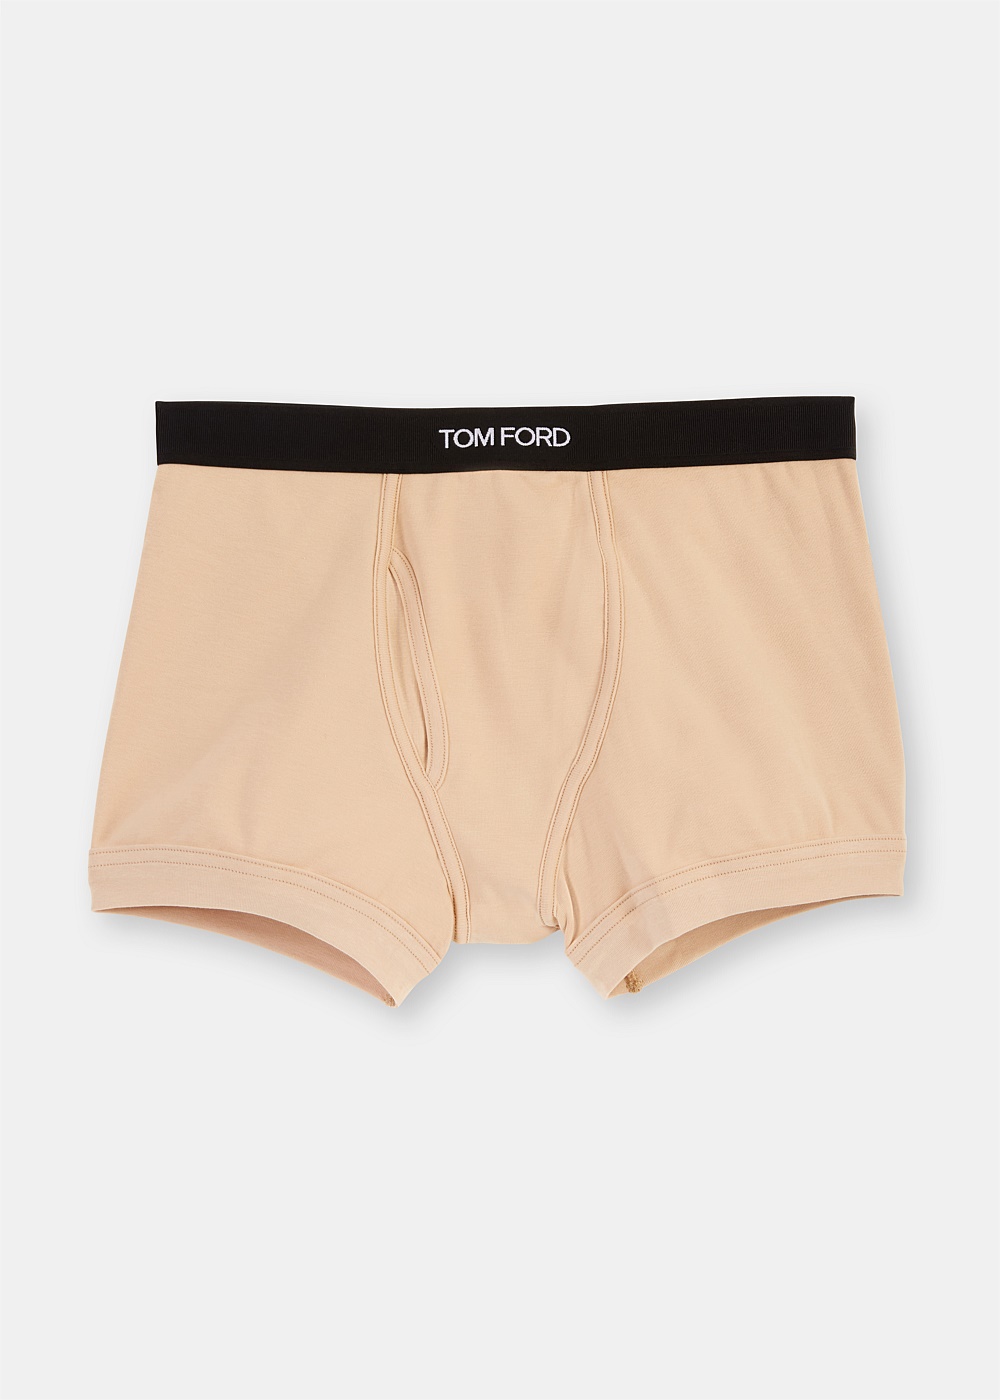 Shop Tom Ford Underwear Nude Cotton Boxer Briefs | Harrolds Australia